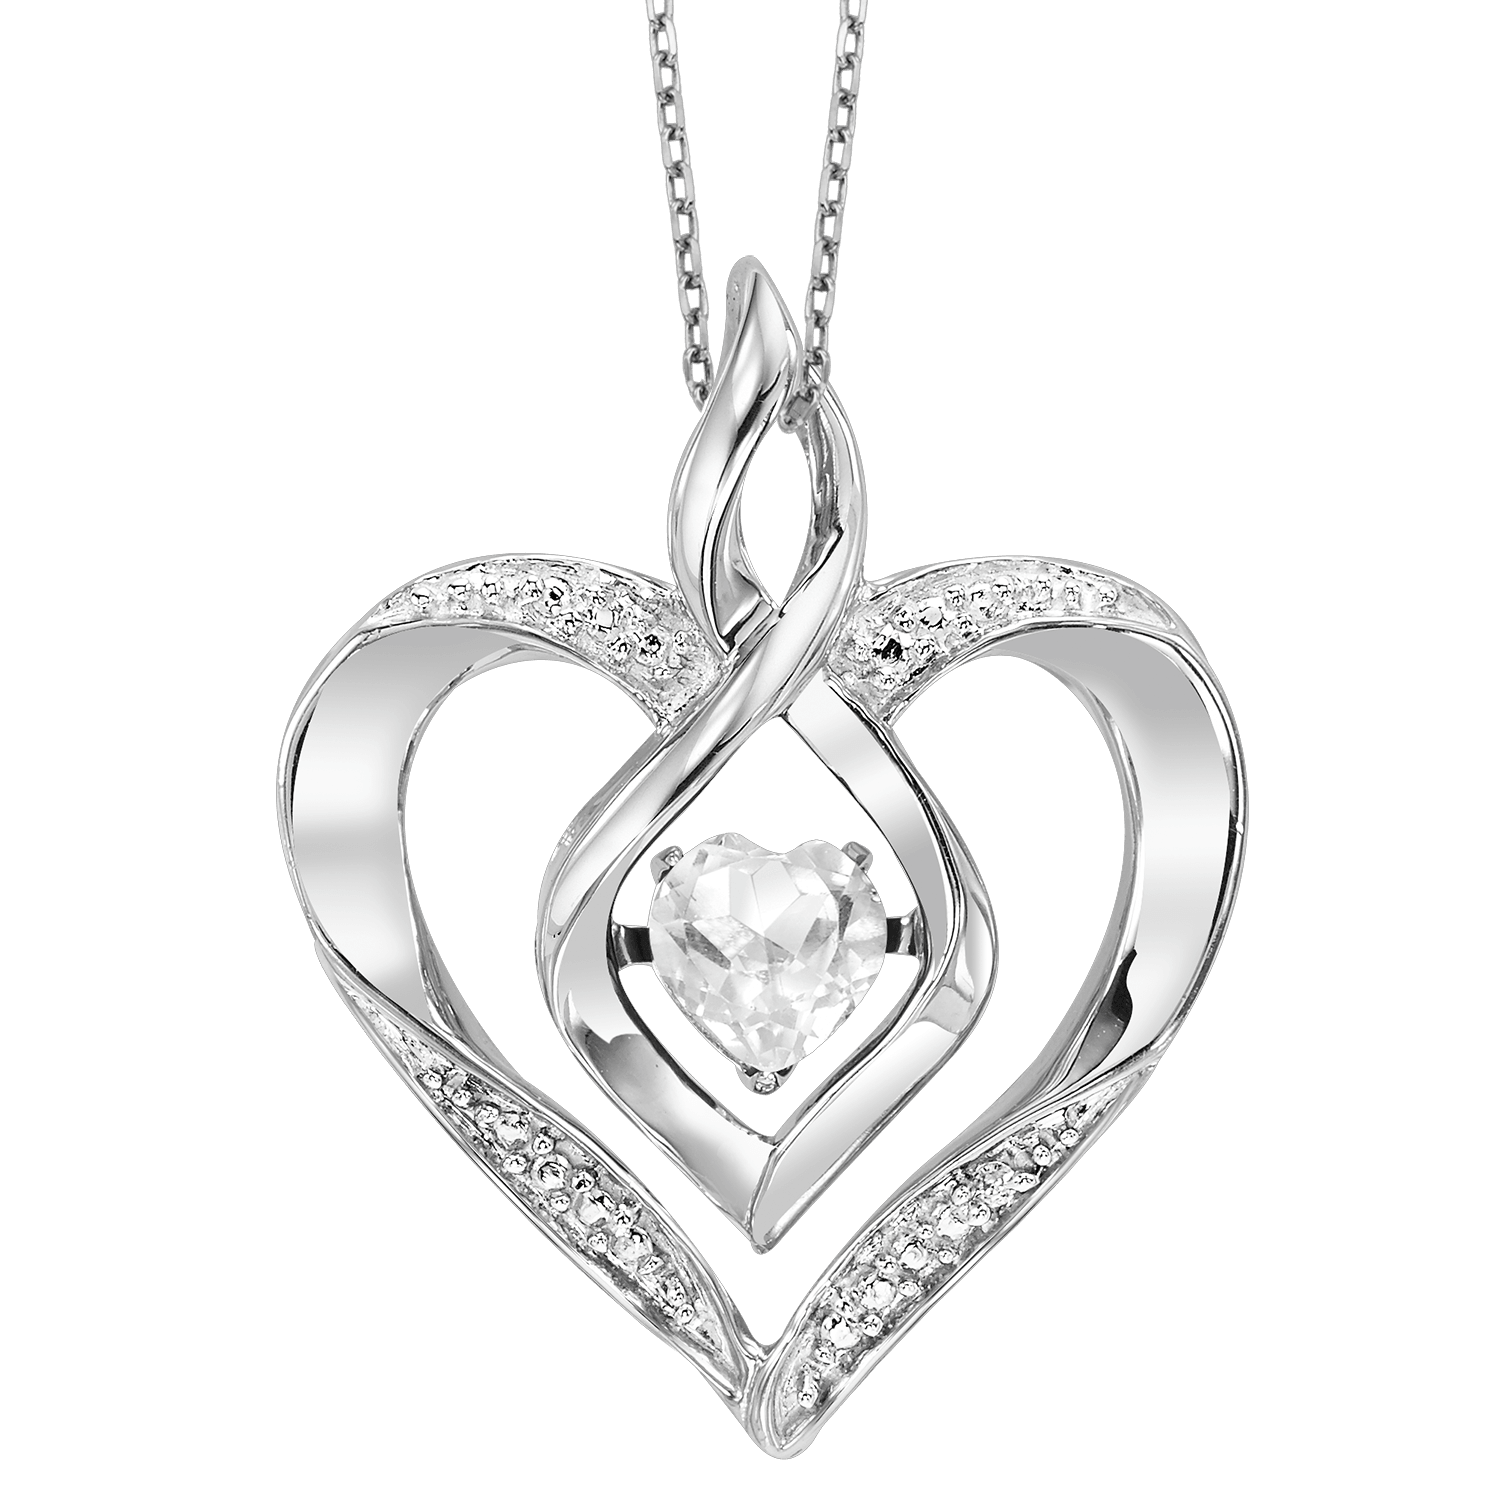 BW James Jewelers Pendant 16 Page Christmas Catalog Offer SS Diamond ROL-Birthst Heart White Topaz Basics Pendant 1/250Ct